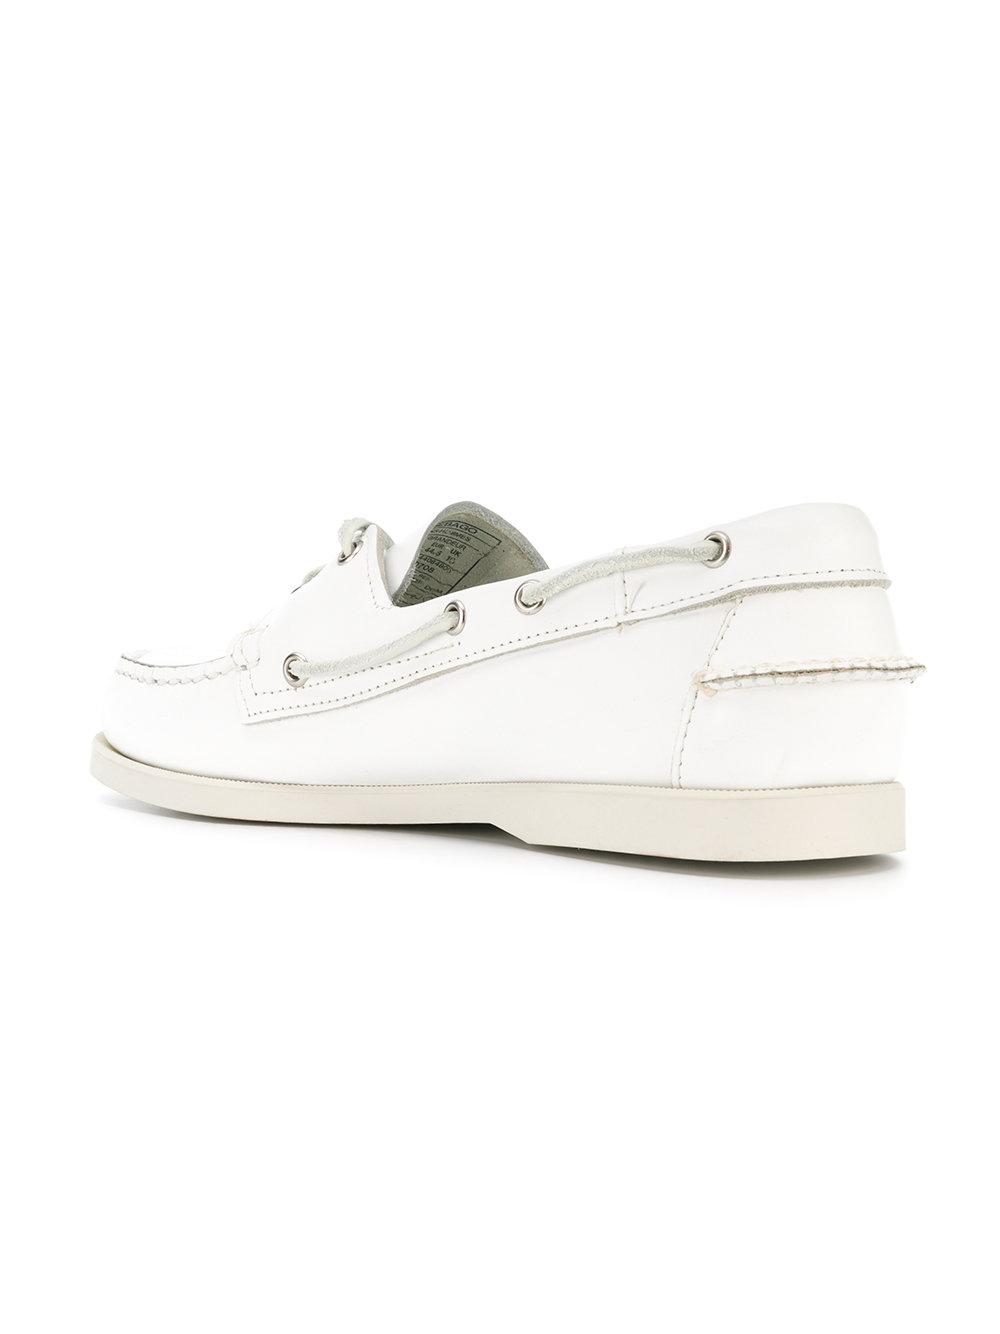 Sebago Leather Docksides Shoes in White for Men - Lyst